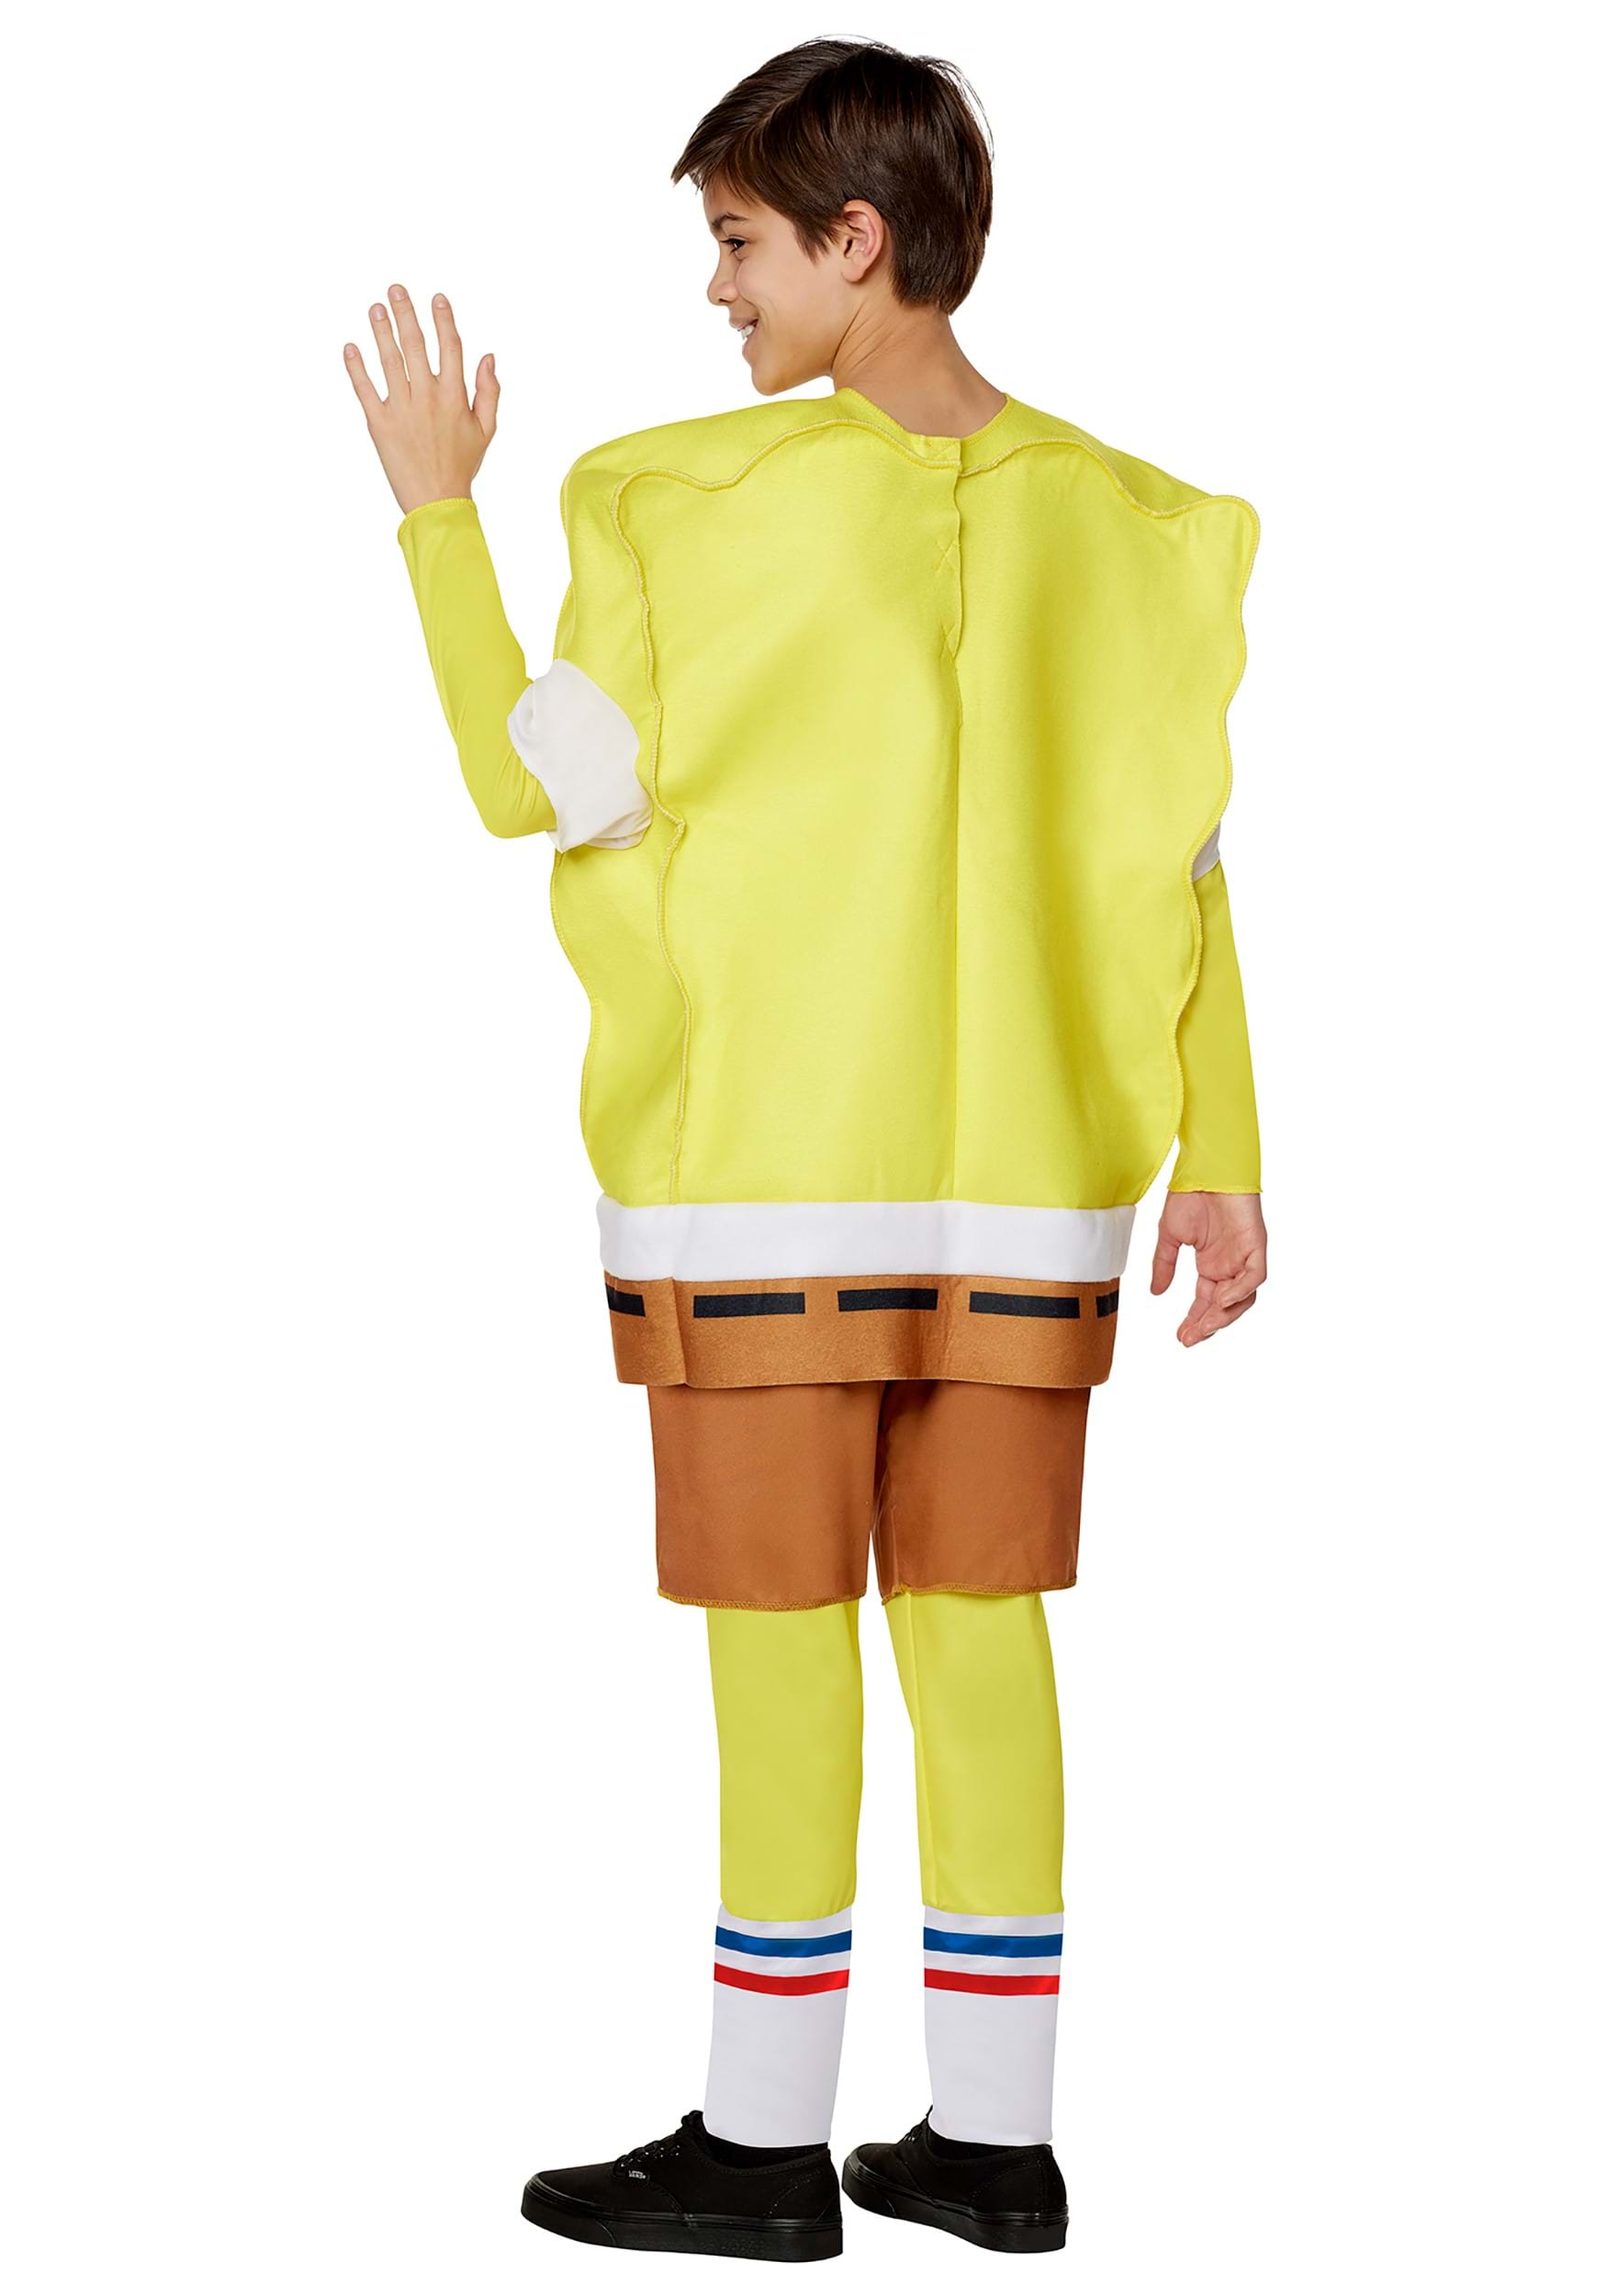 SpongeBob SquarePants Costume For Kids